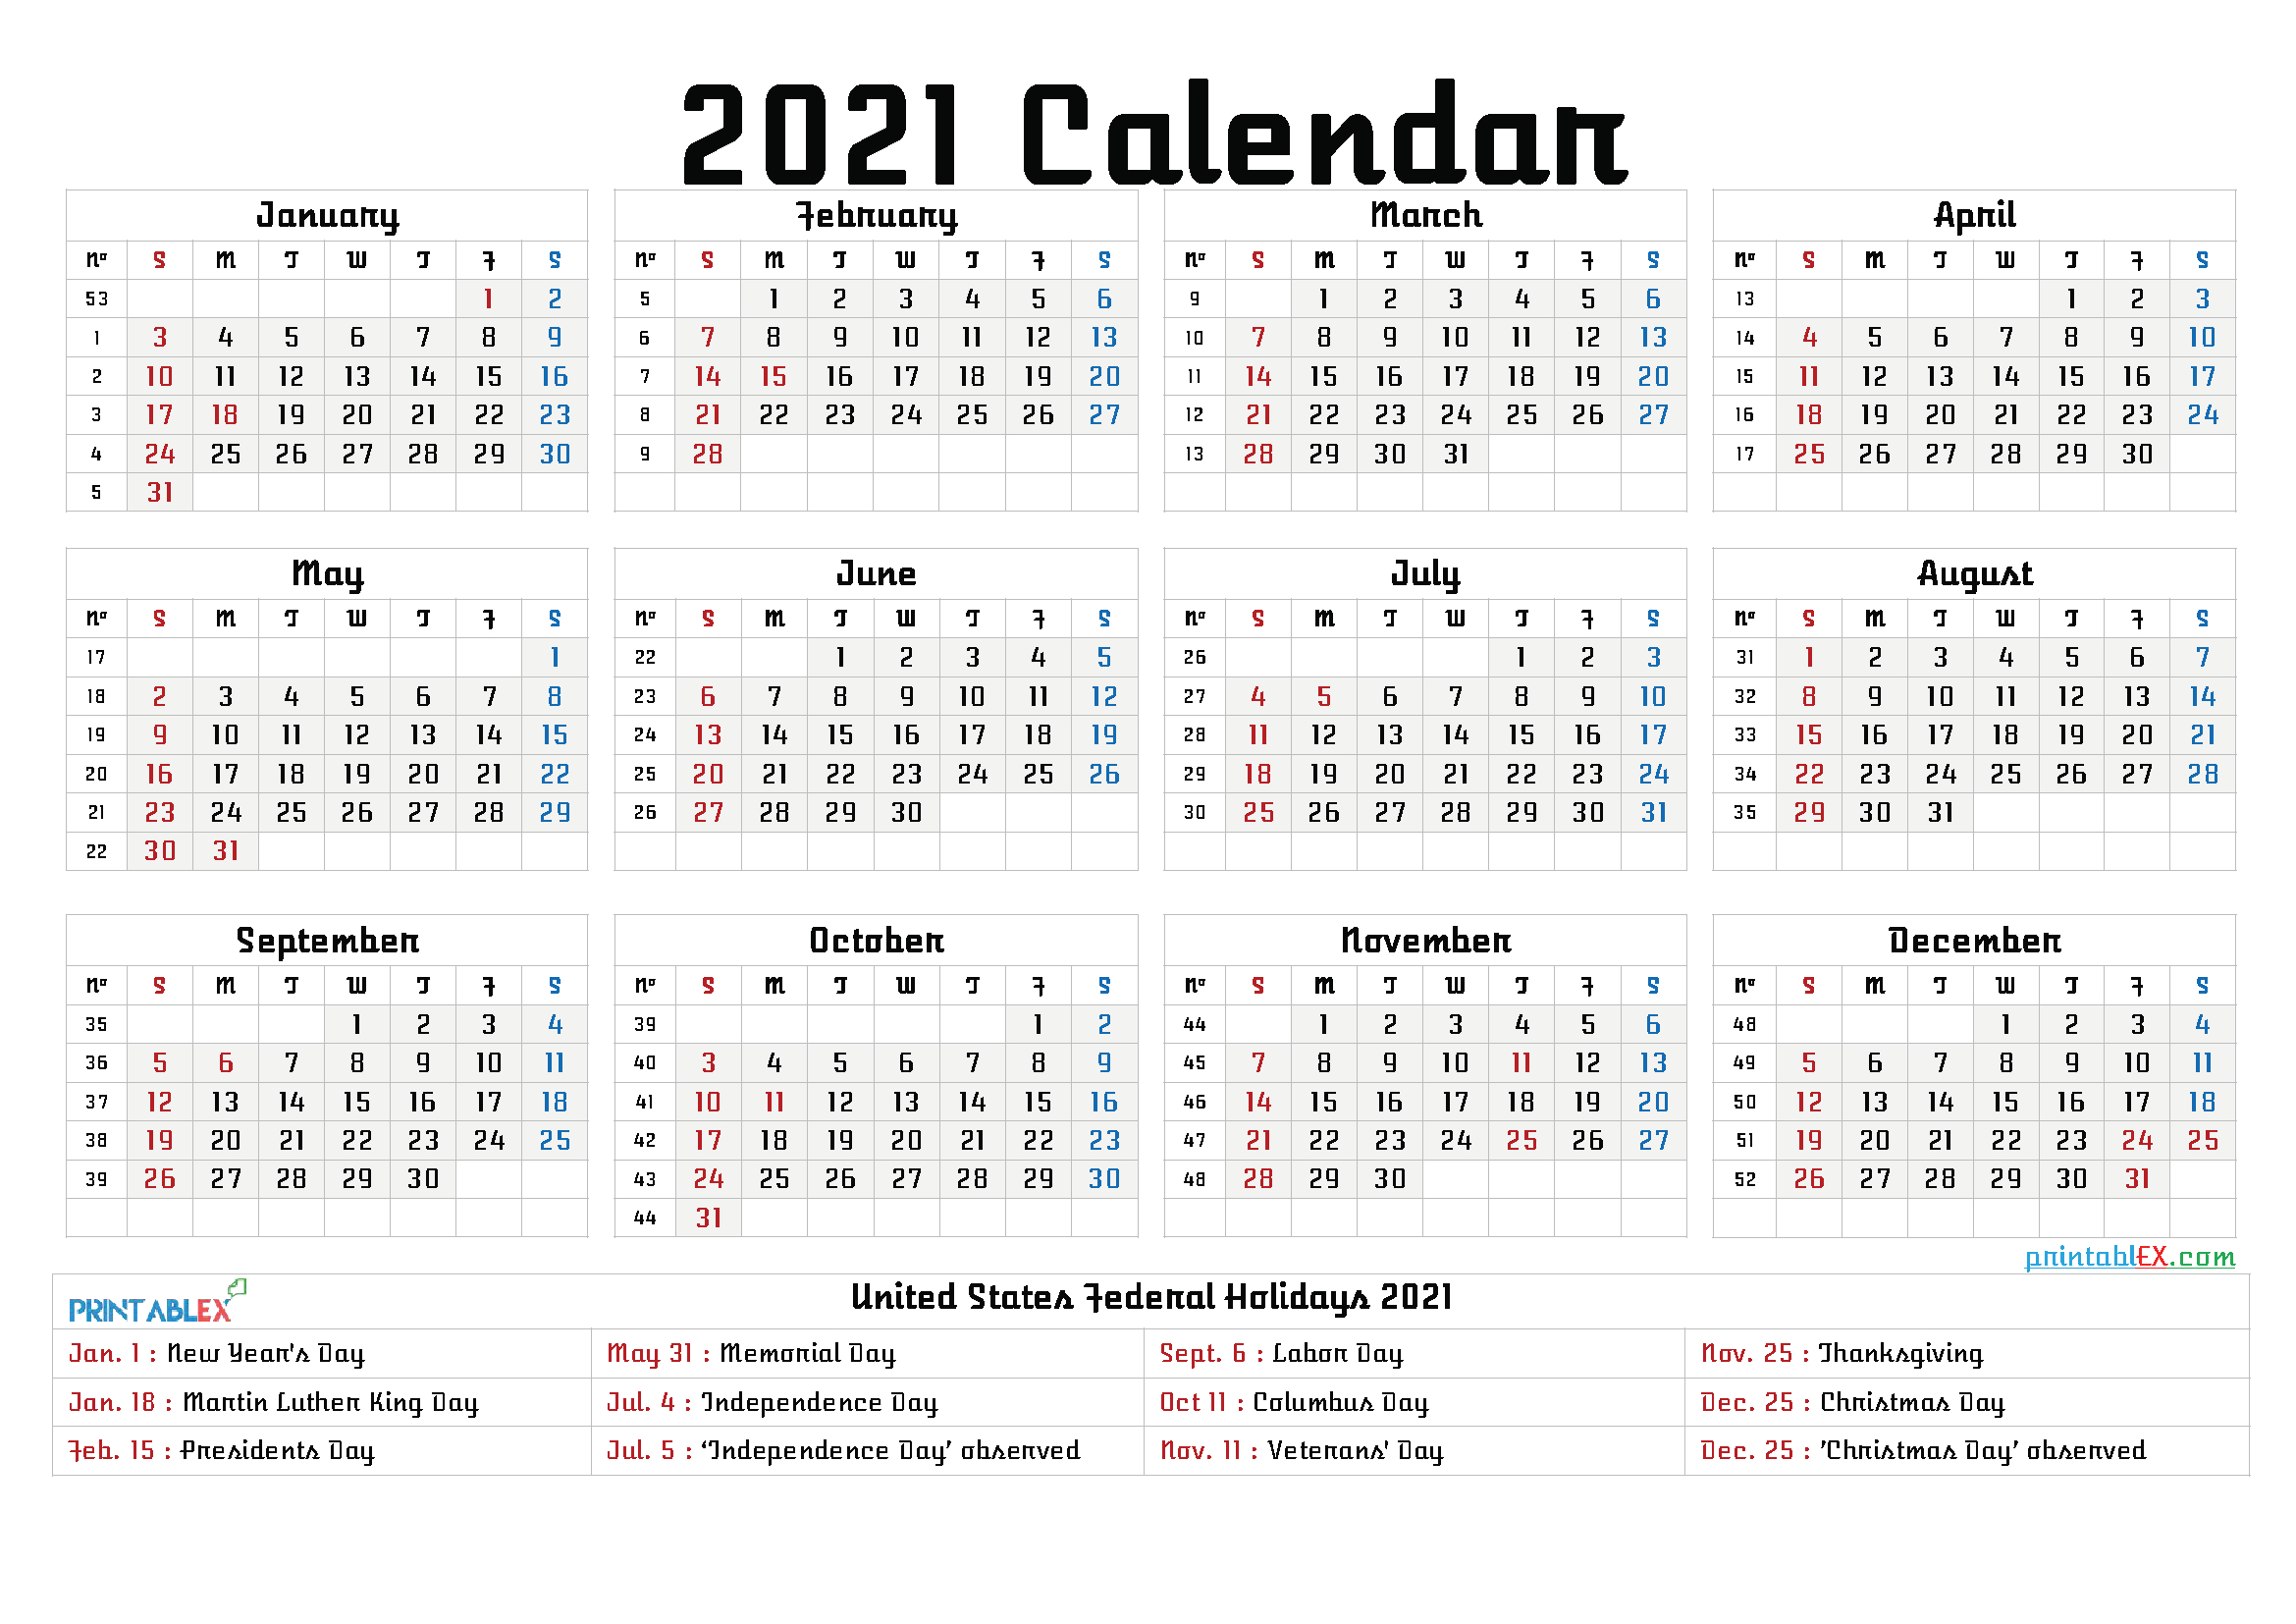 2021 Calendar Printable Free Pdf - 2021 Calendar Printable